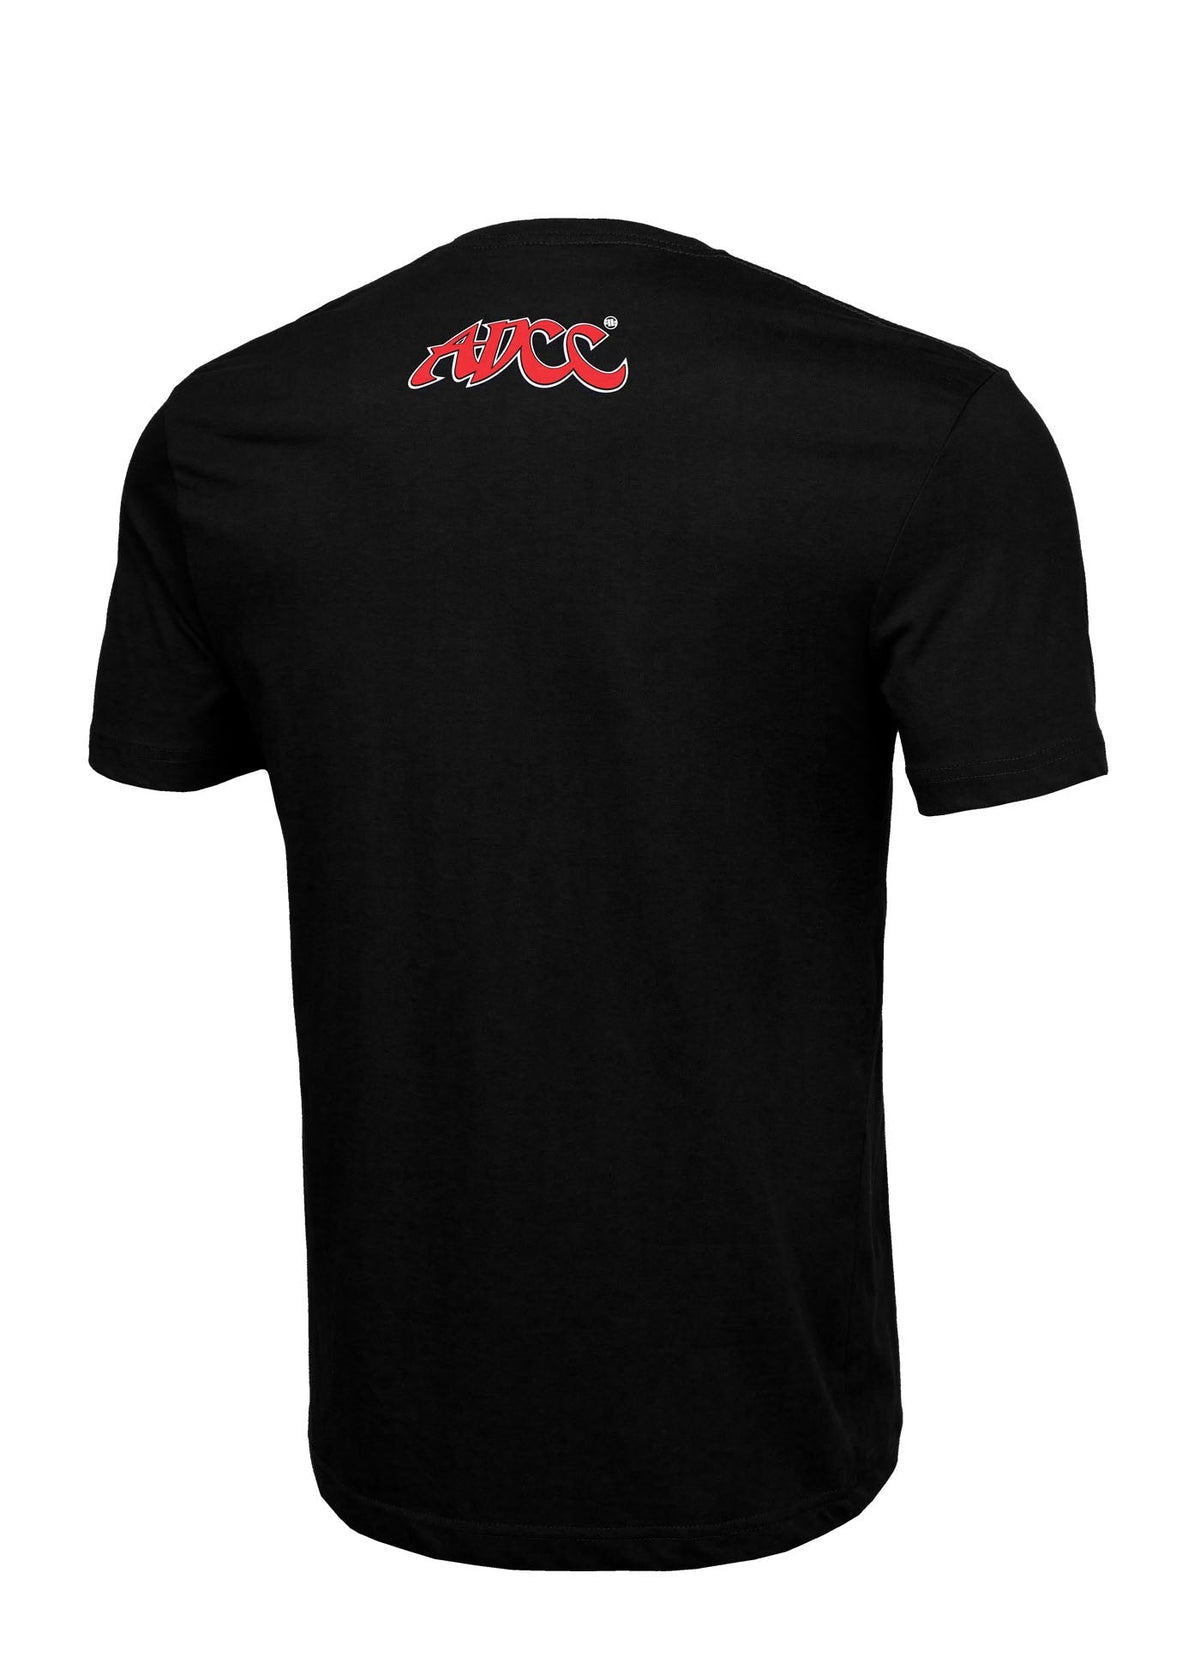 ADCC CHAMPIONSHIP 2022 BASIC Black T-shirt